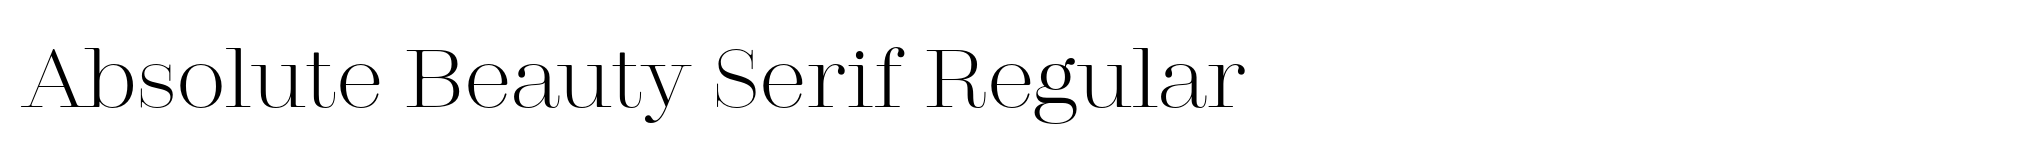 Absolute Beauty Serif Regular image